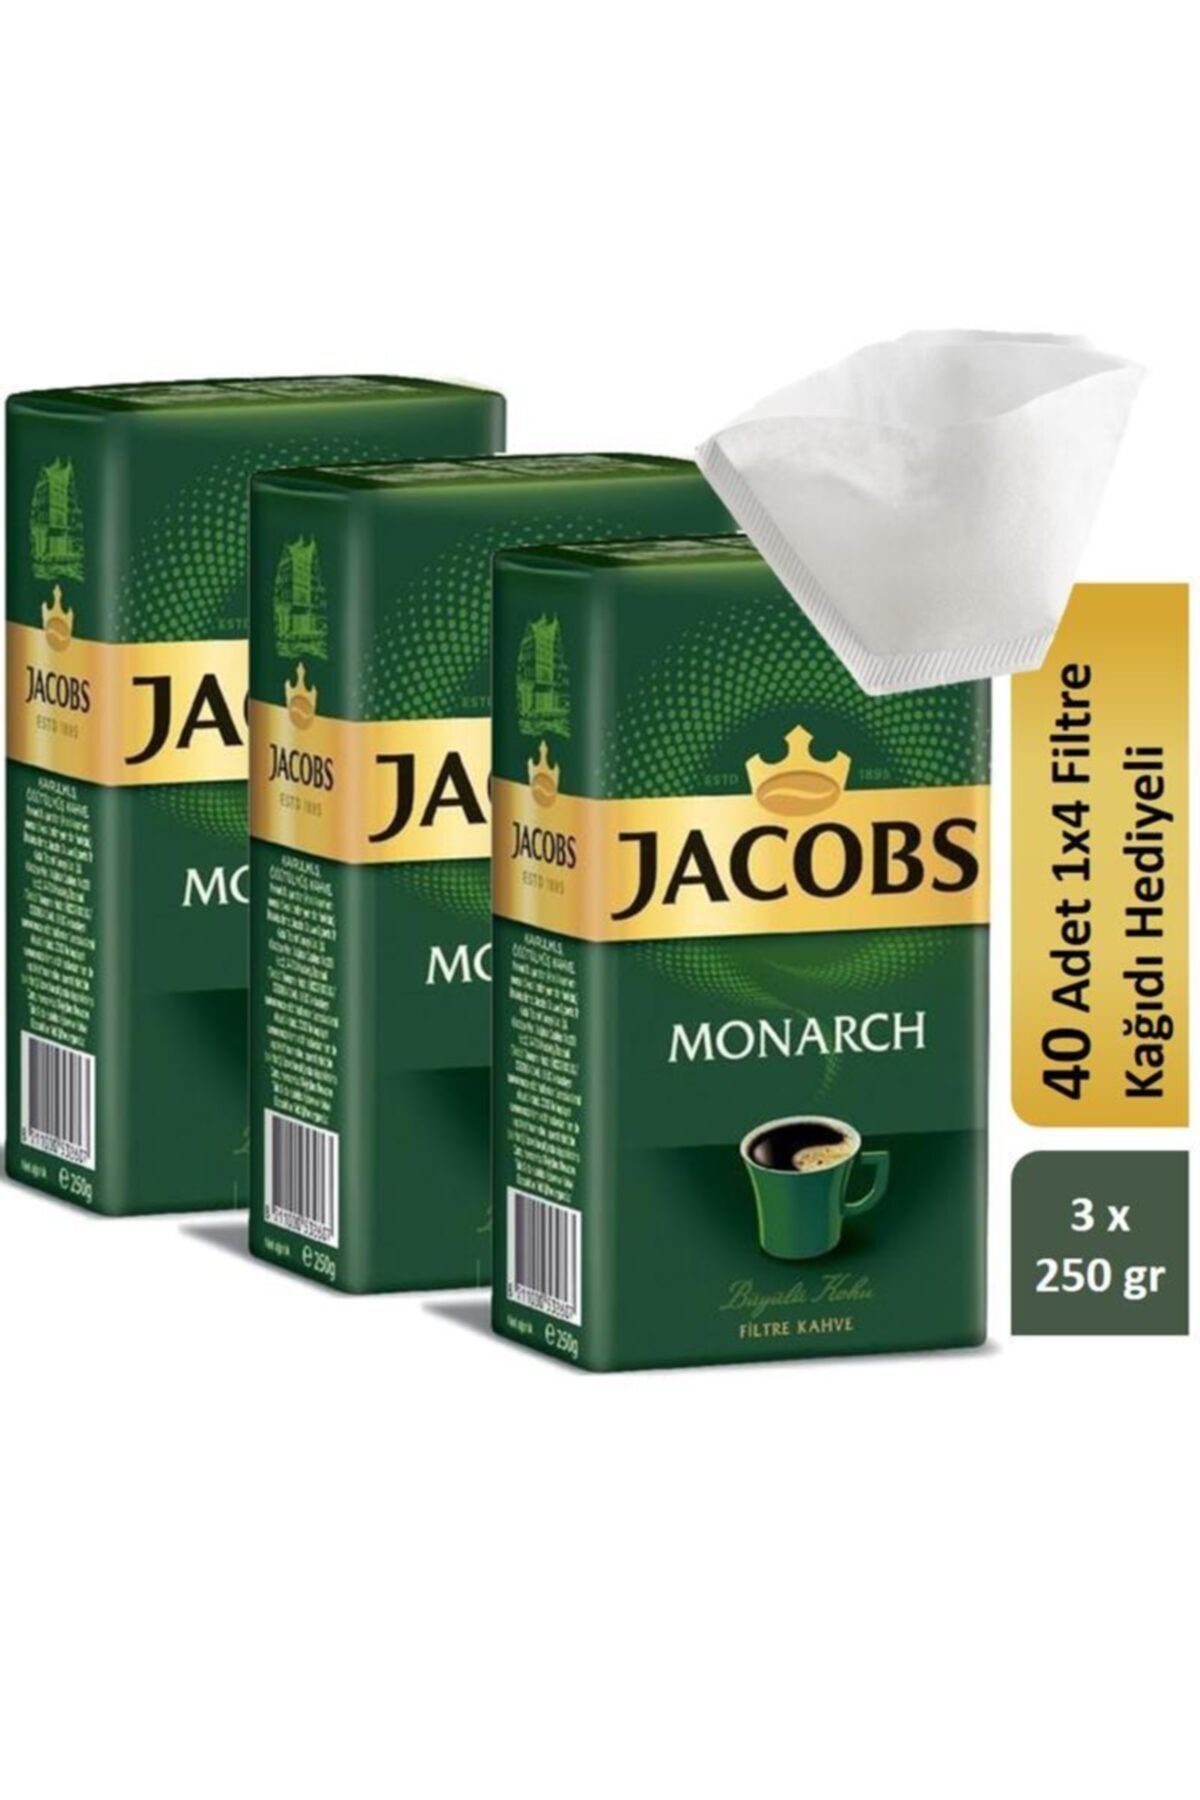 Jacobs Monarch Filtre Kahve 250 Gr X 3 Paket - 40 Adet Filtre Kağıdı